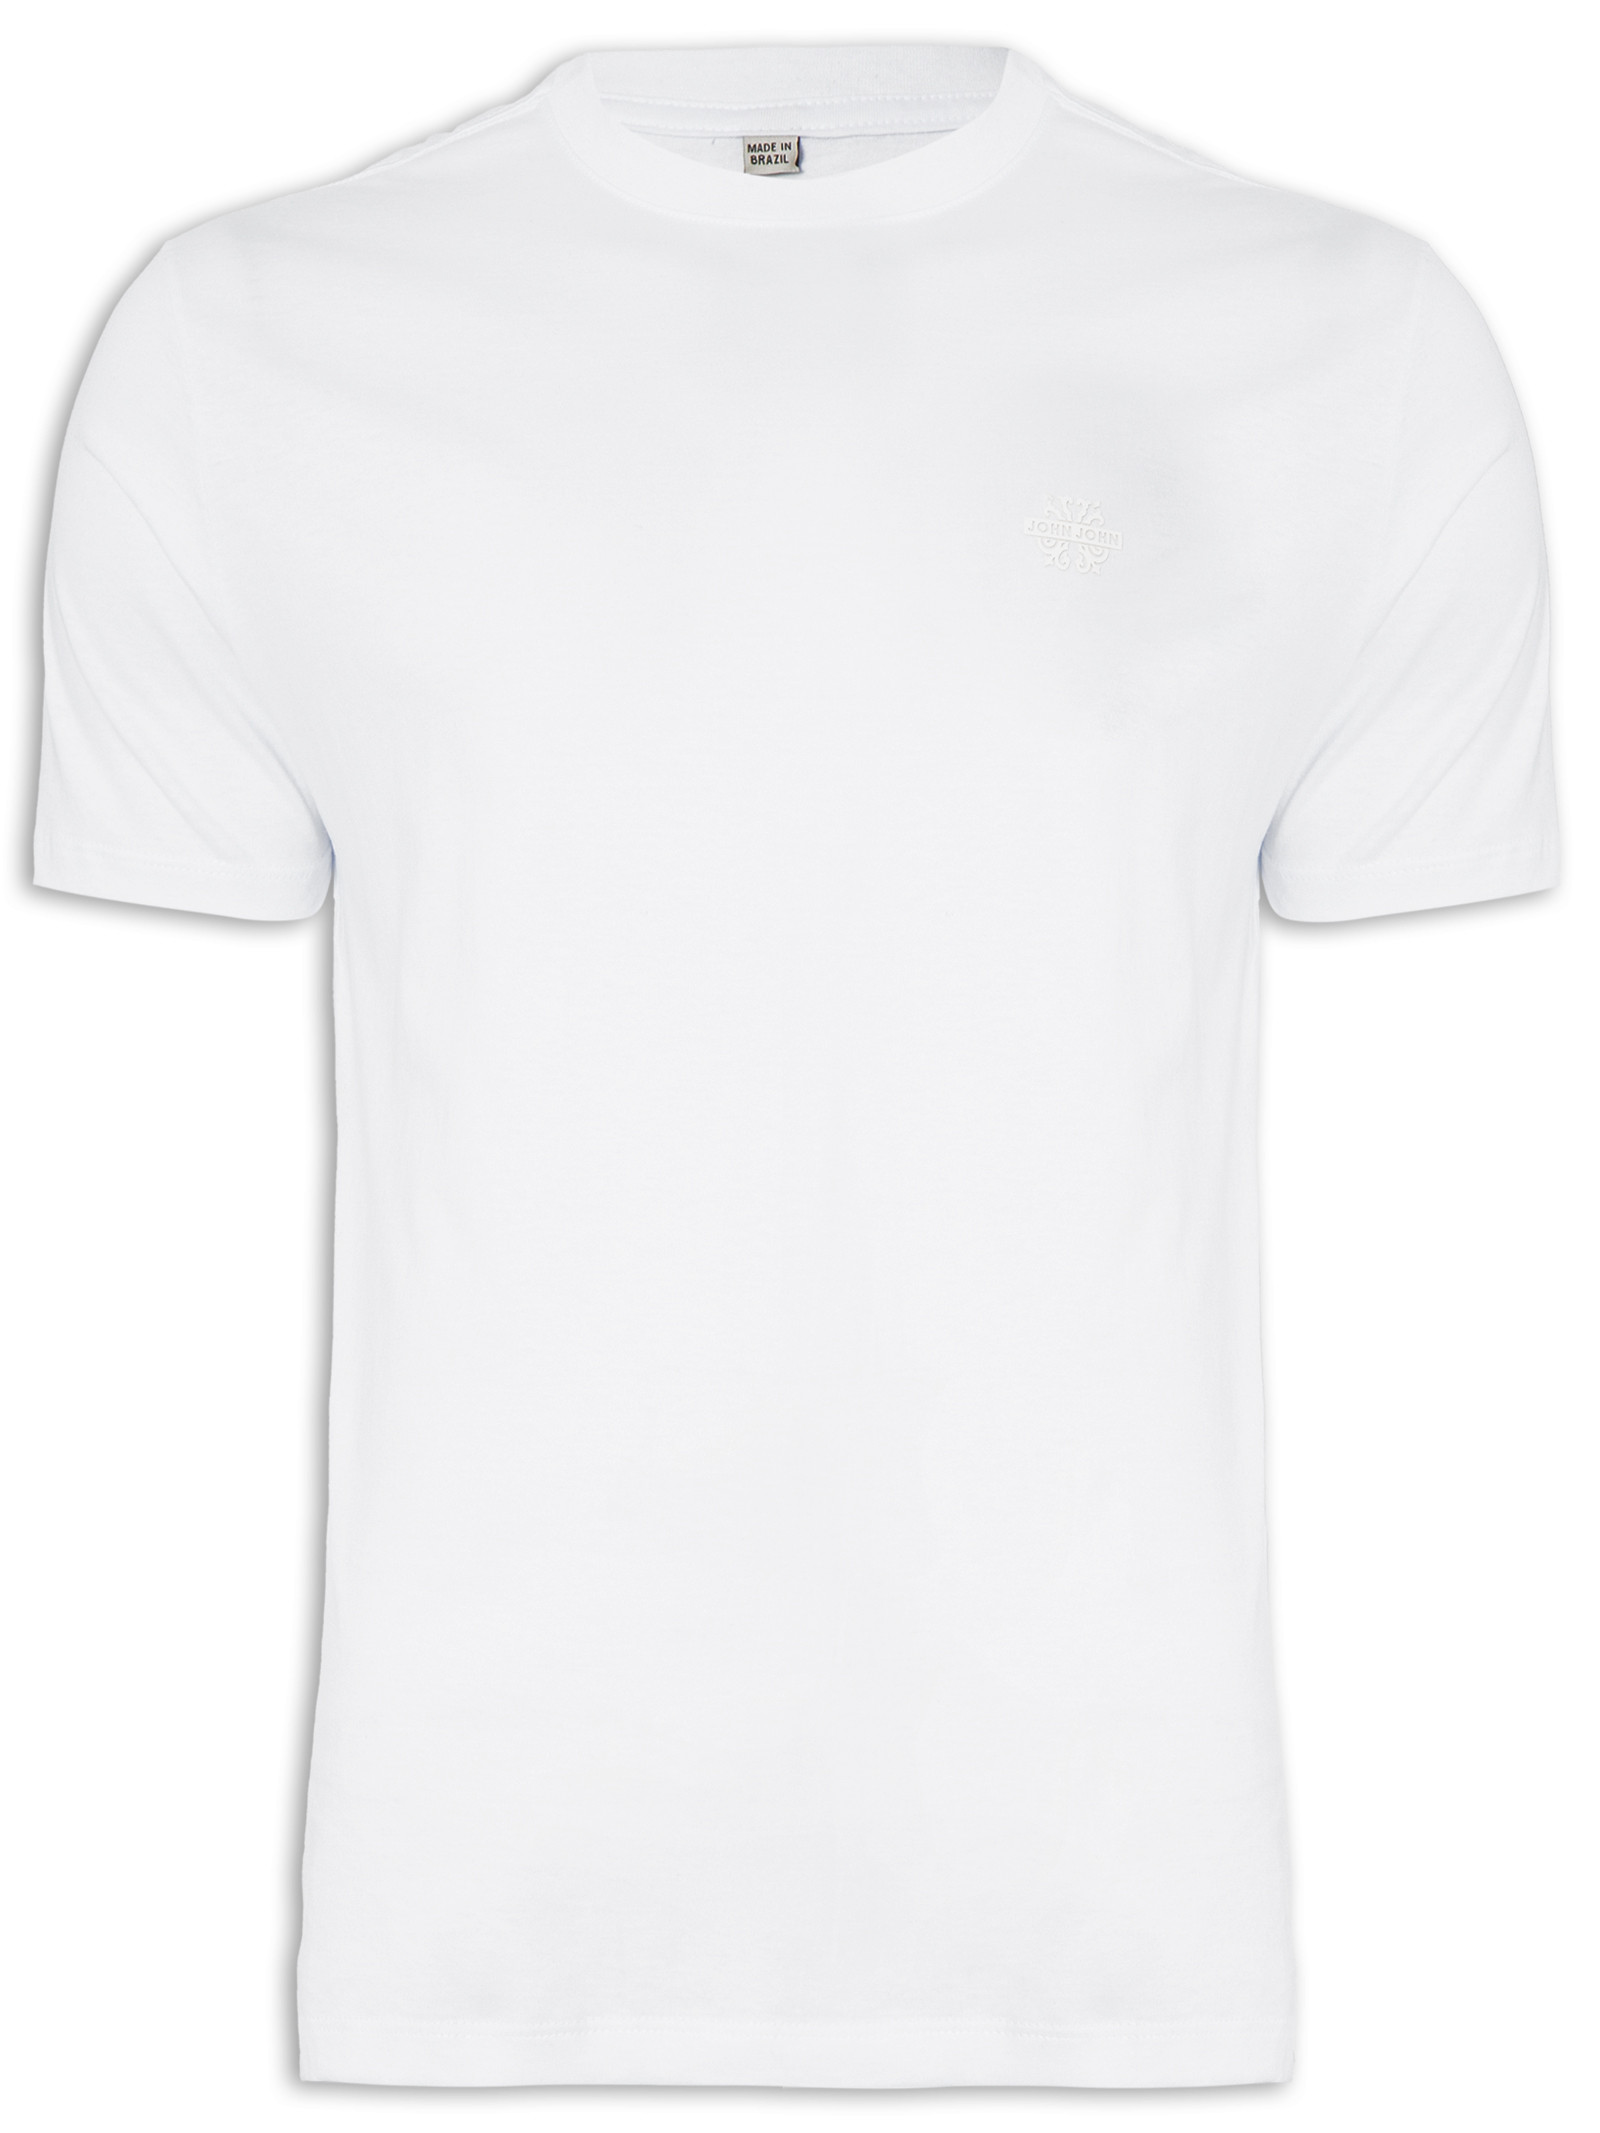 T-shirt Masculina Rg Heaven Transfer - John John - Branco - Oqvestir